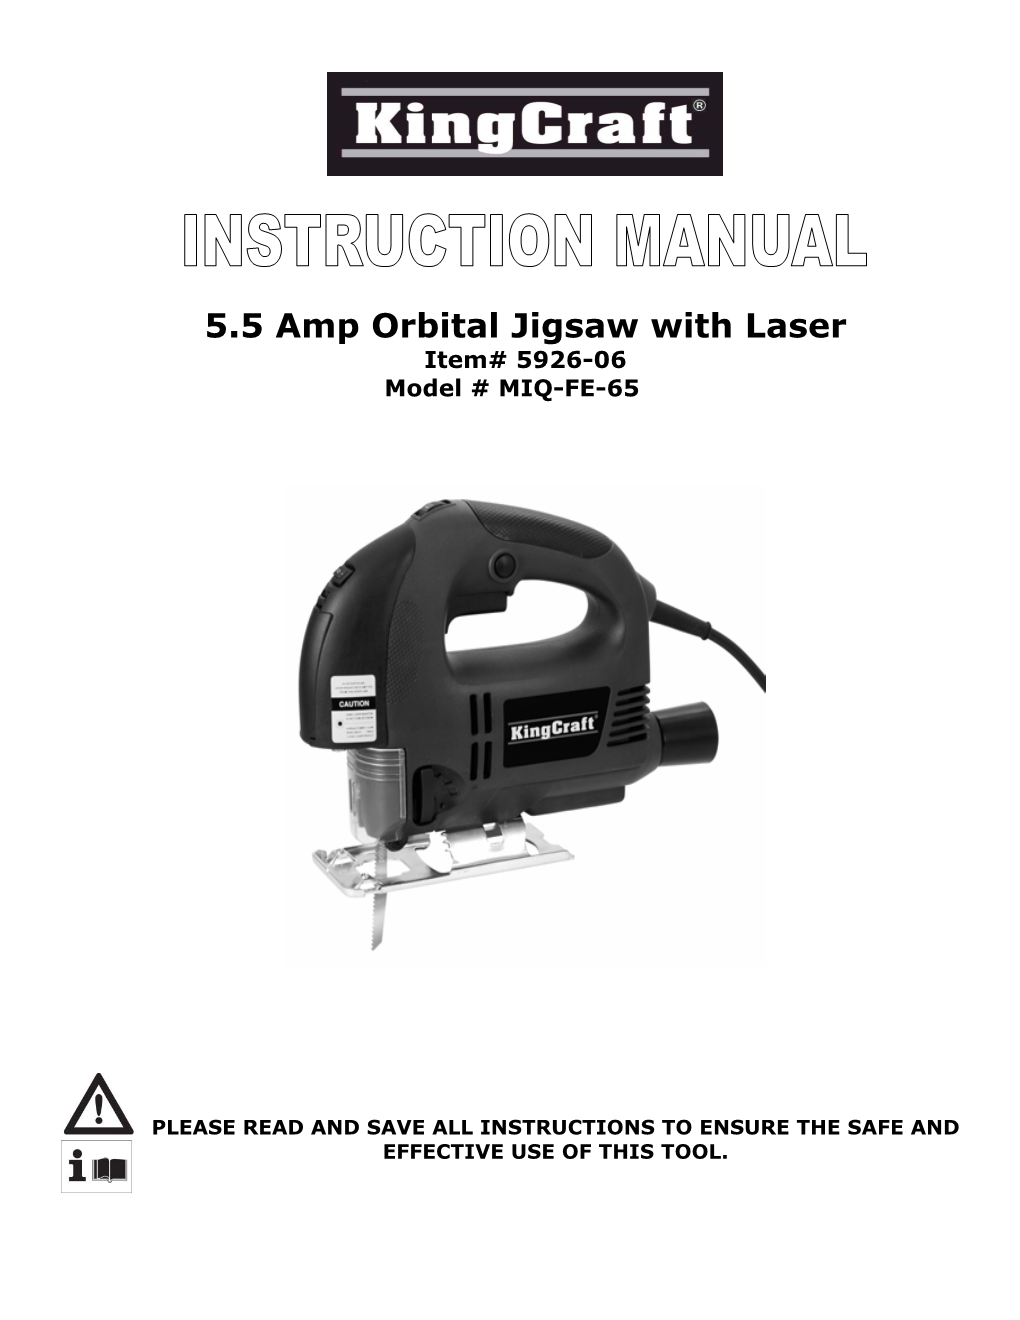 5.5 Amp Orbital Jigsaw with Laser Item# 5926-06 Model # MIQ-FE-65